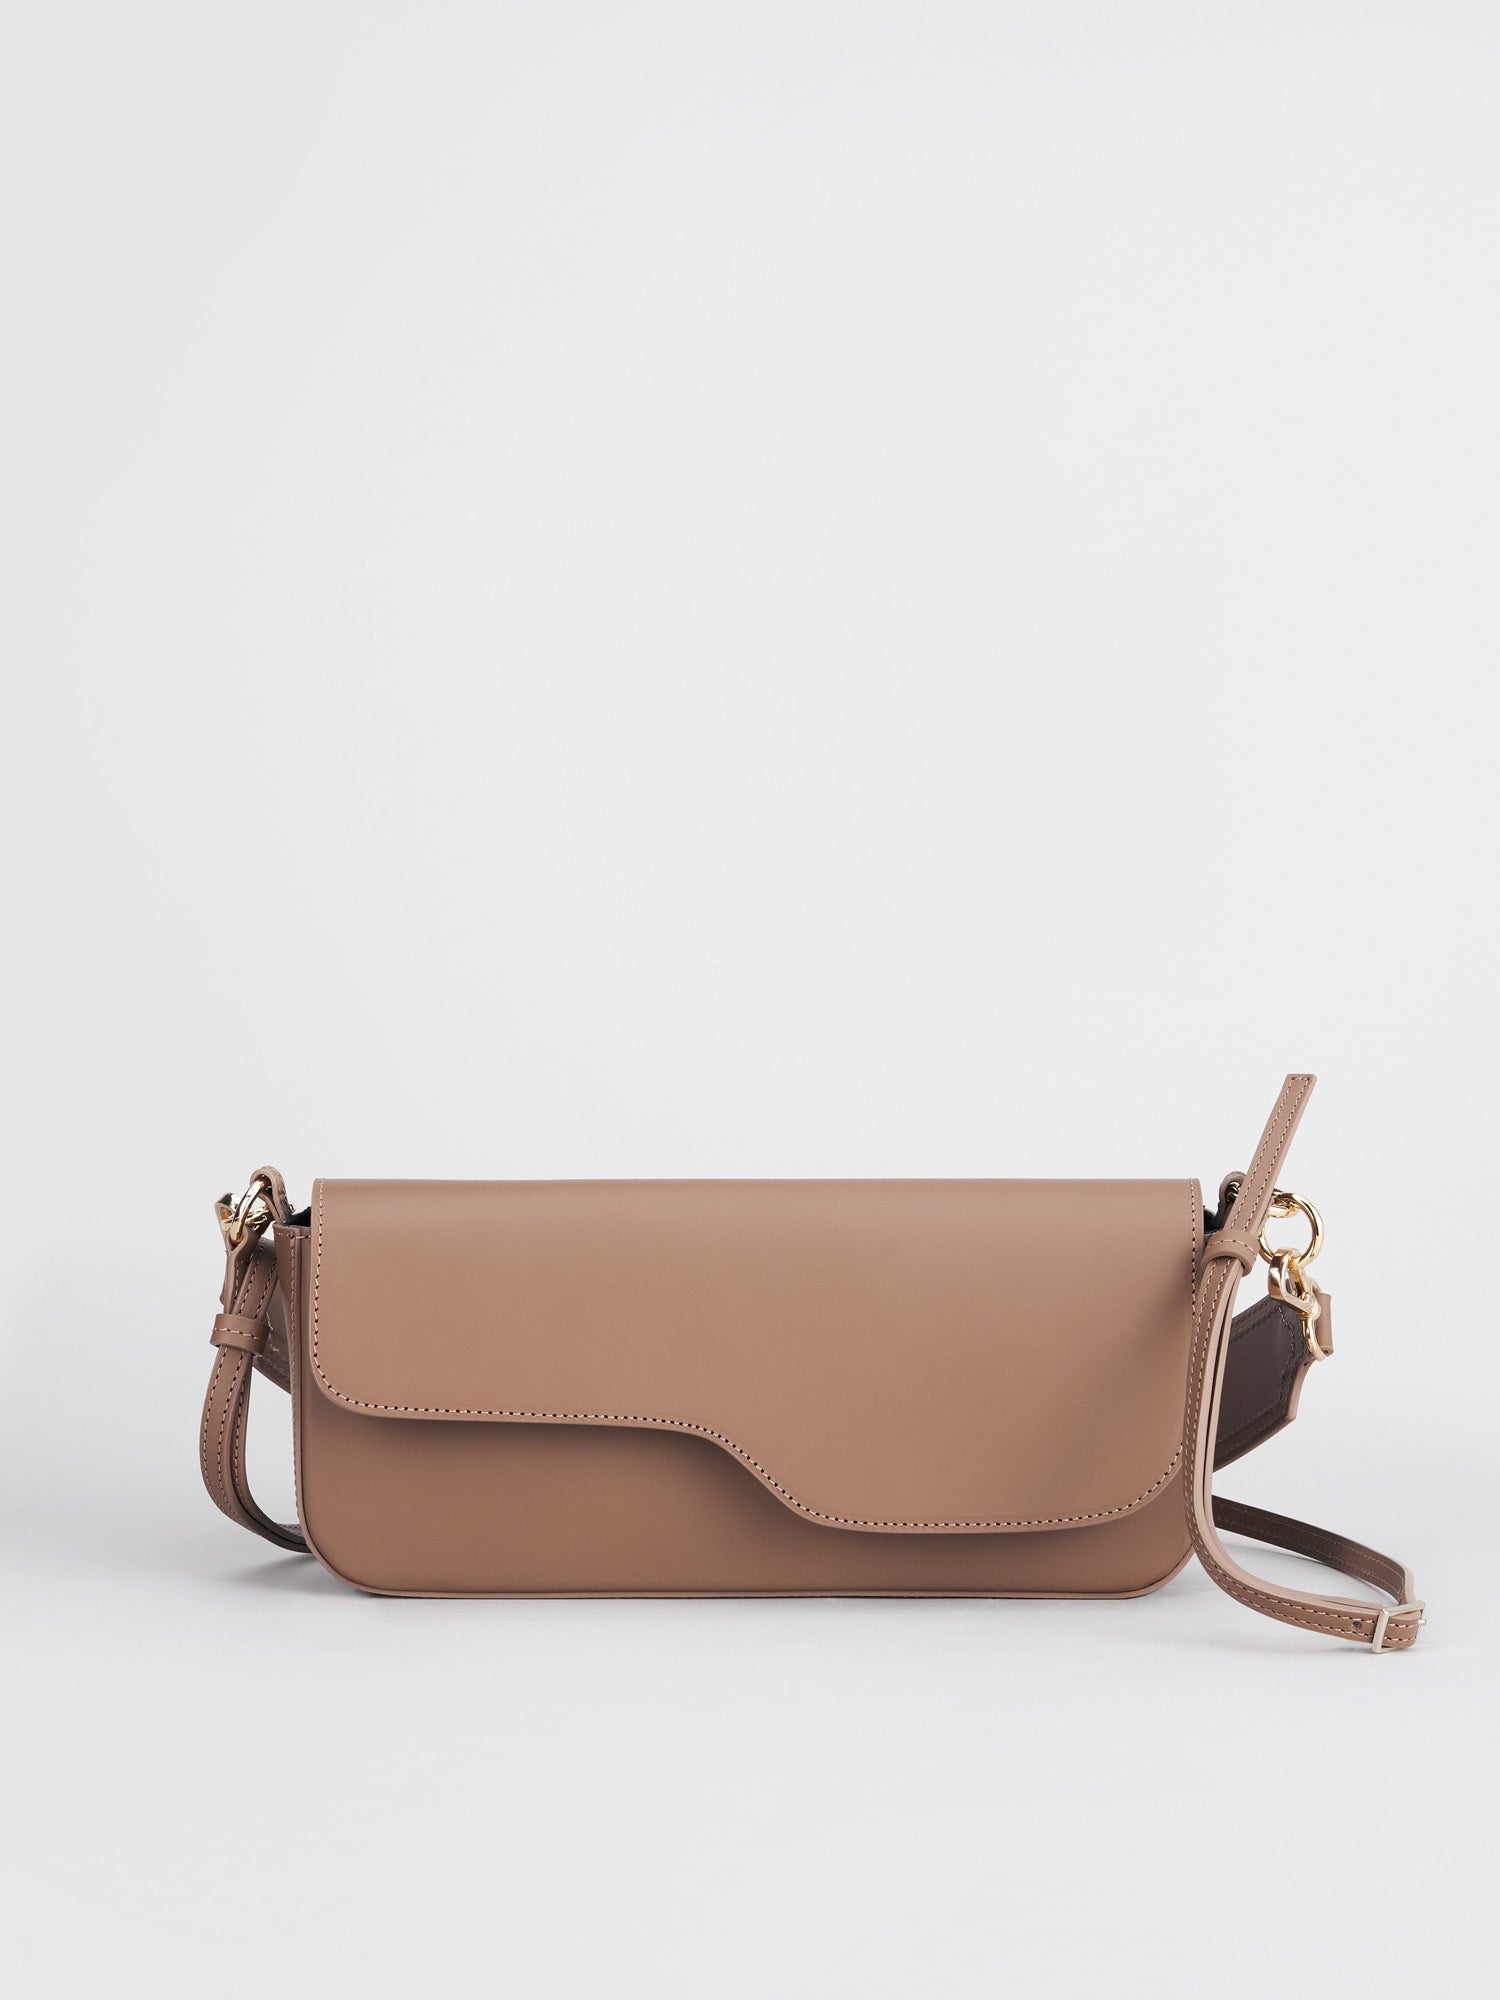 Ercolano Hazelnut Leather Shoulder Bag 112114 -1